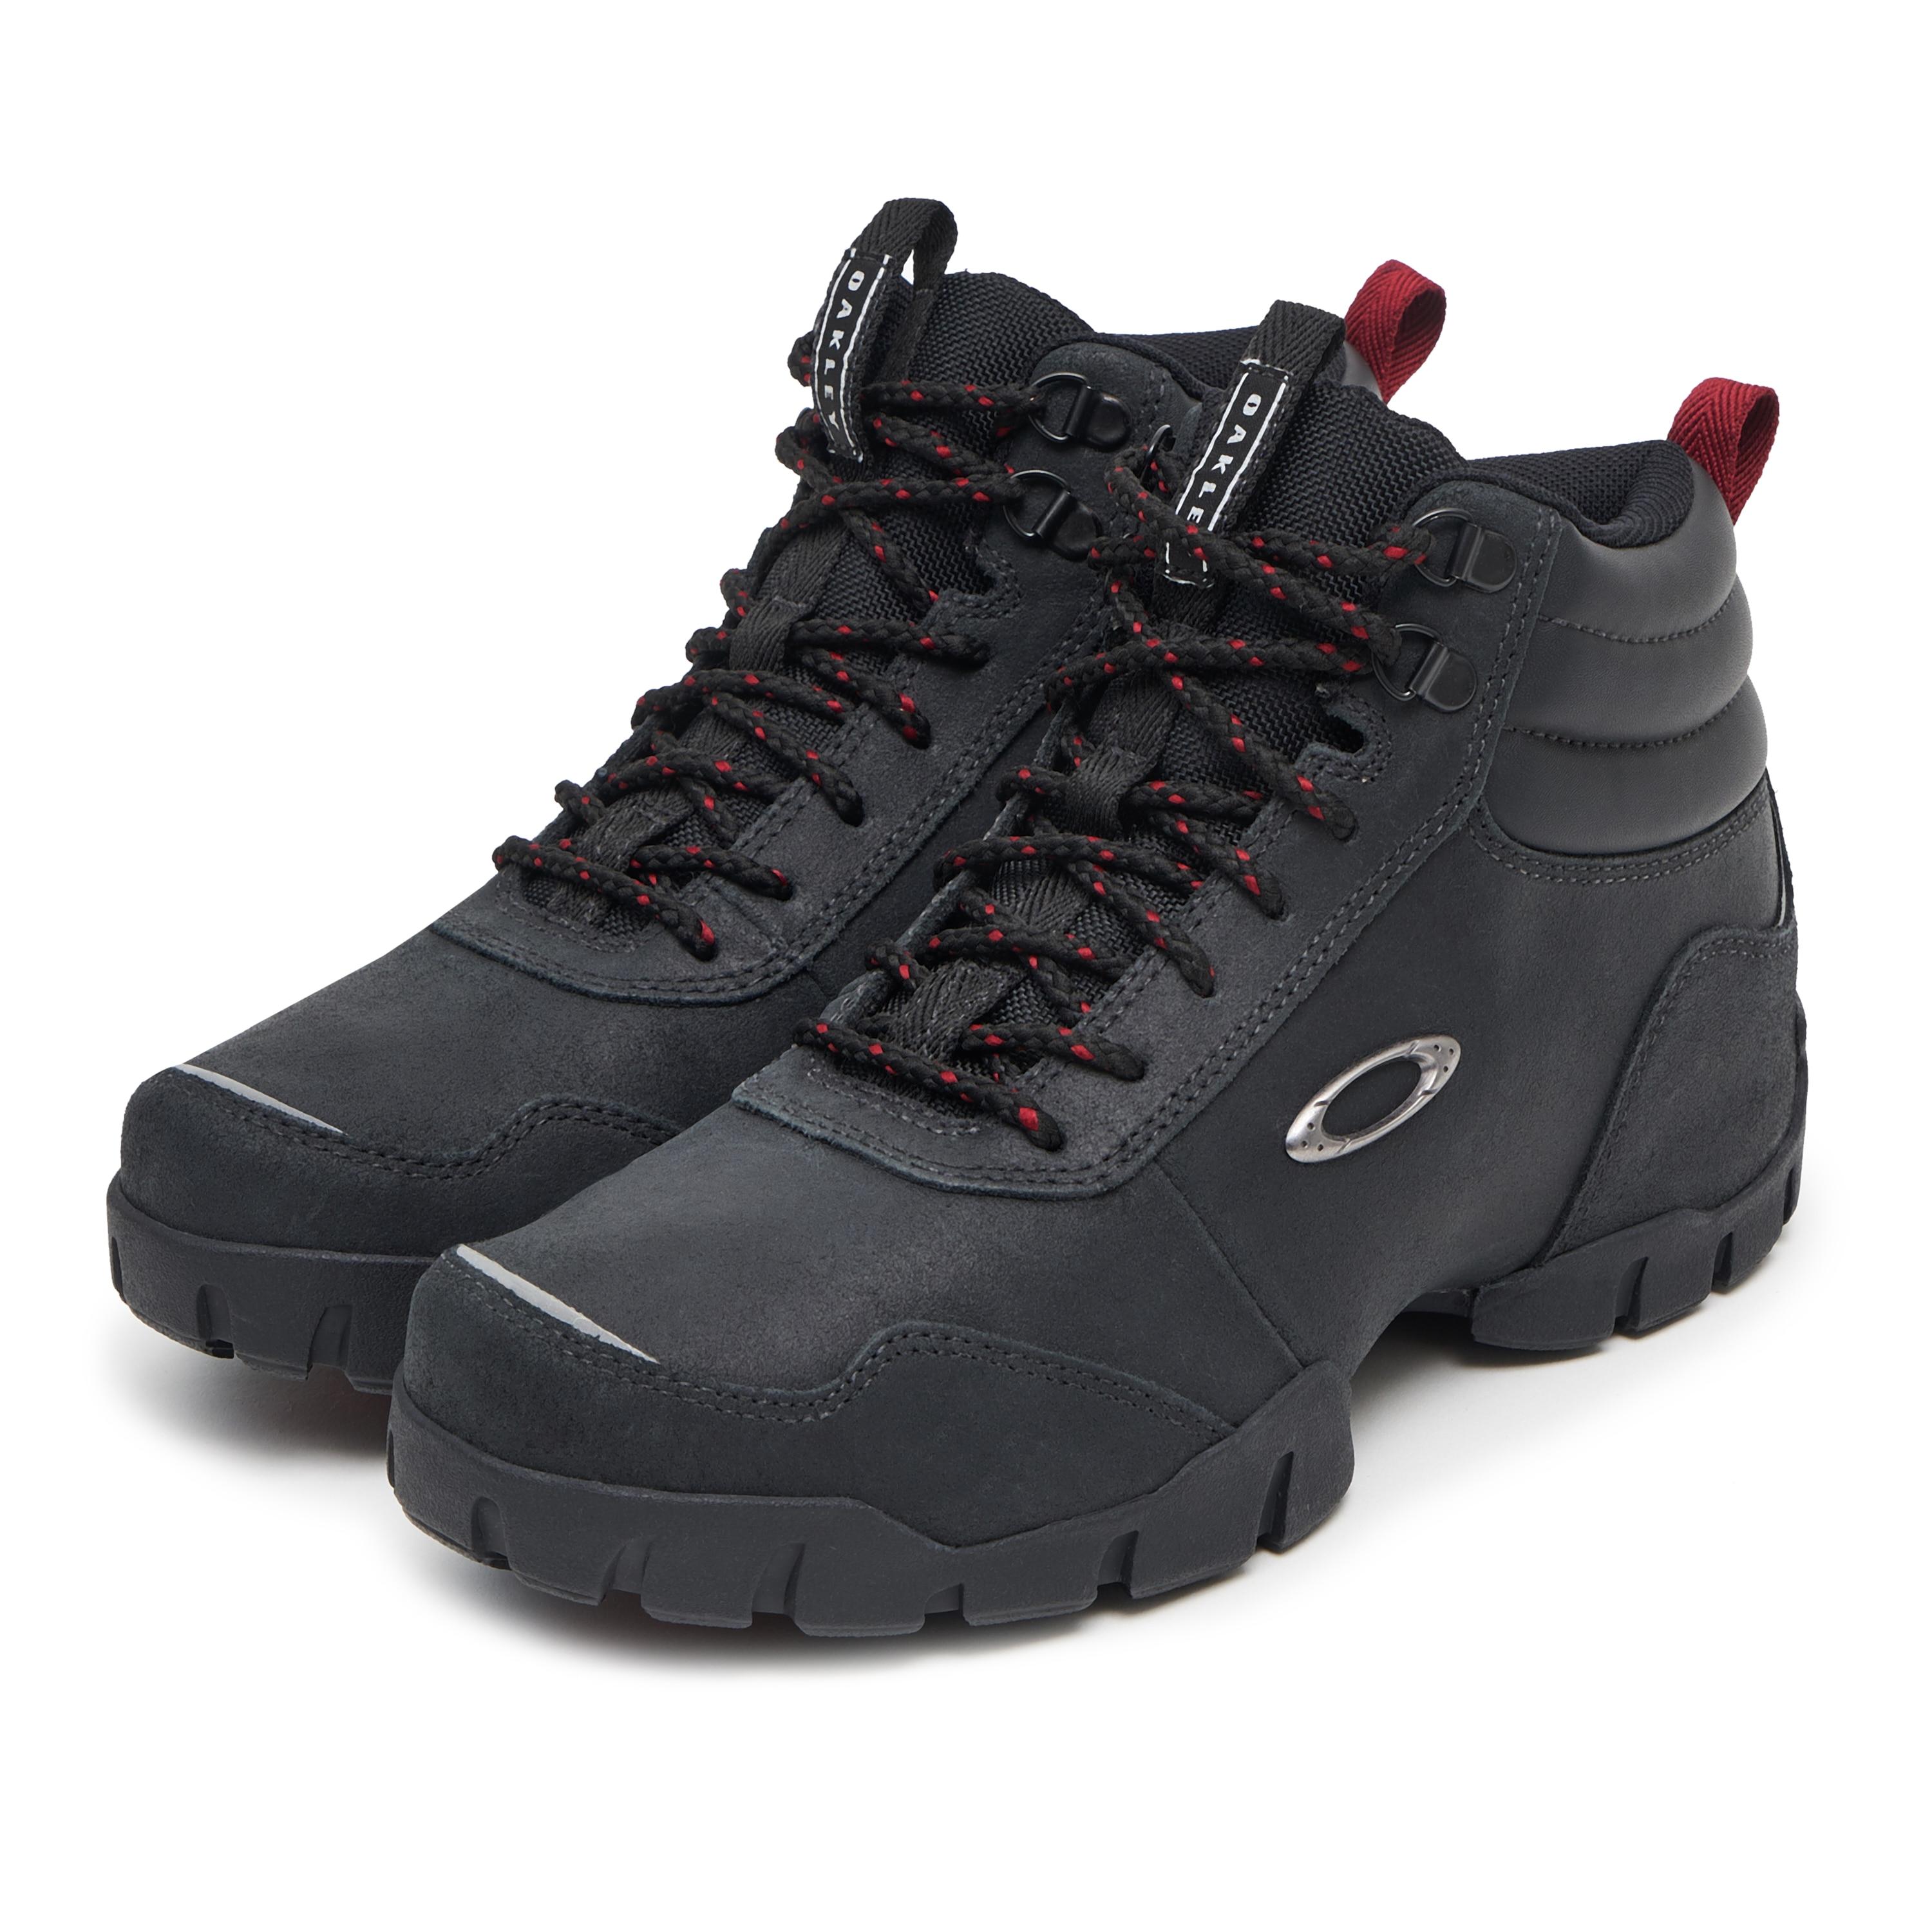 Oakley Outdoor Boots in Black for Men - Lyst